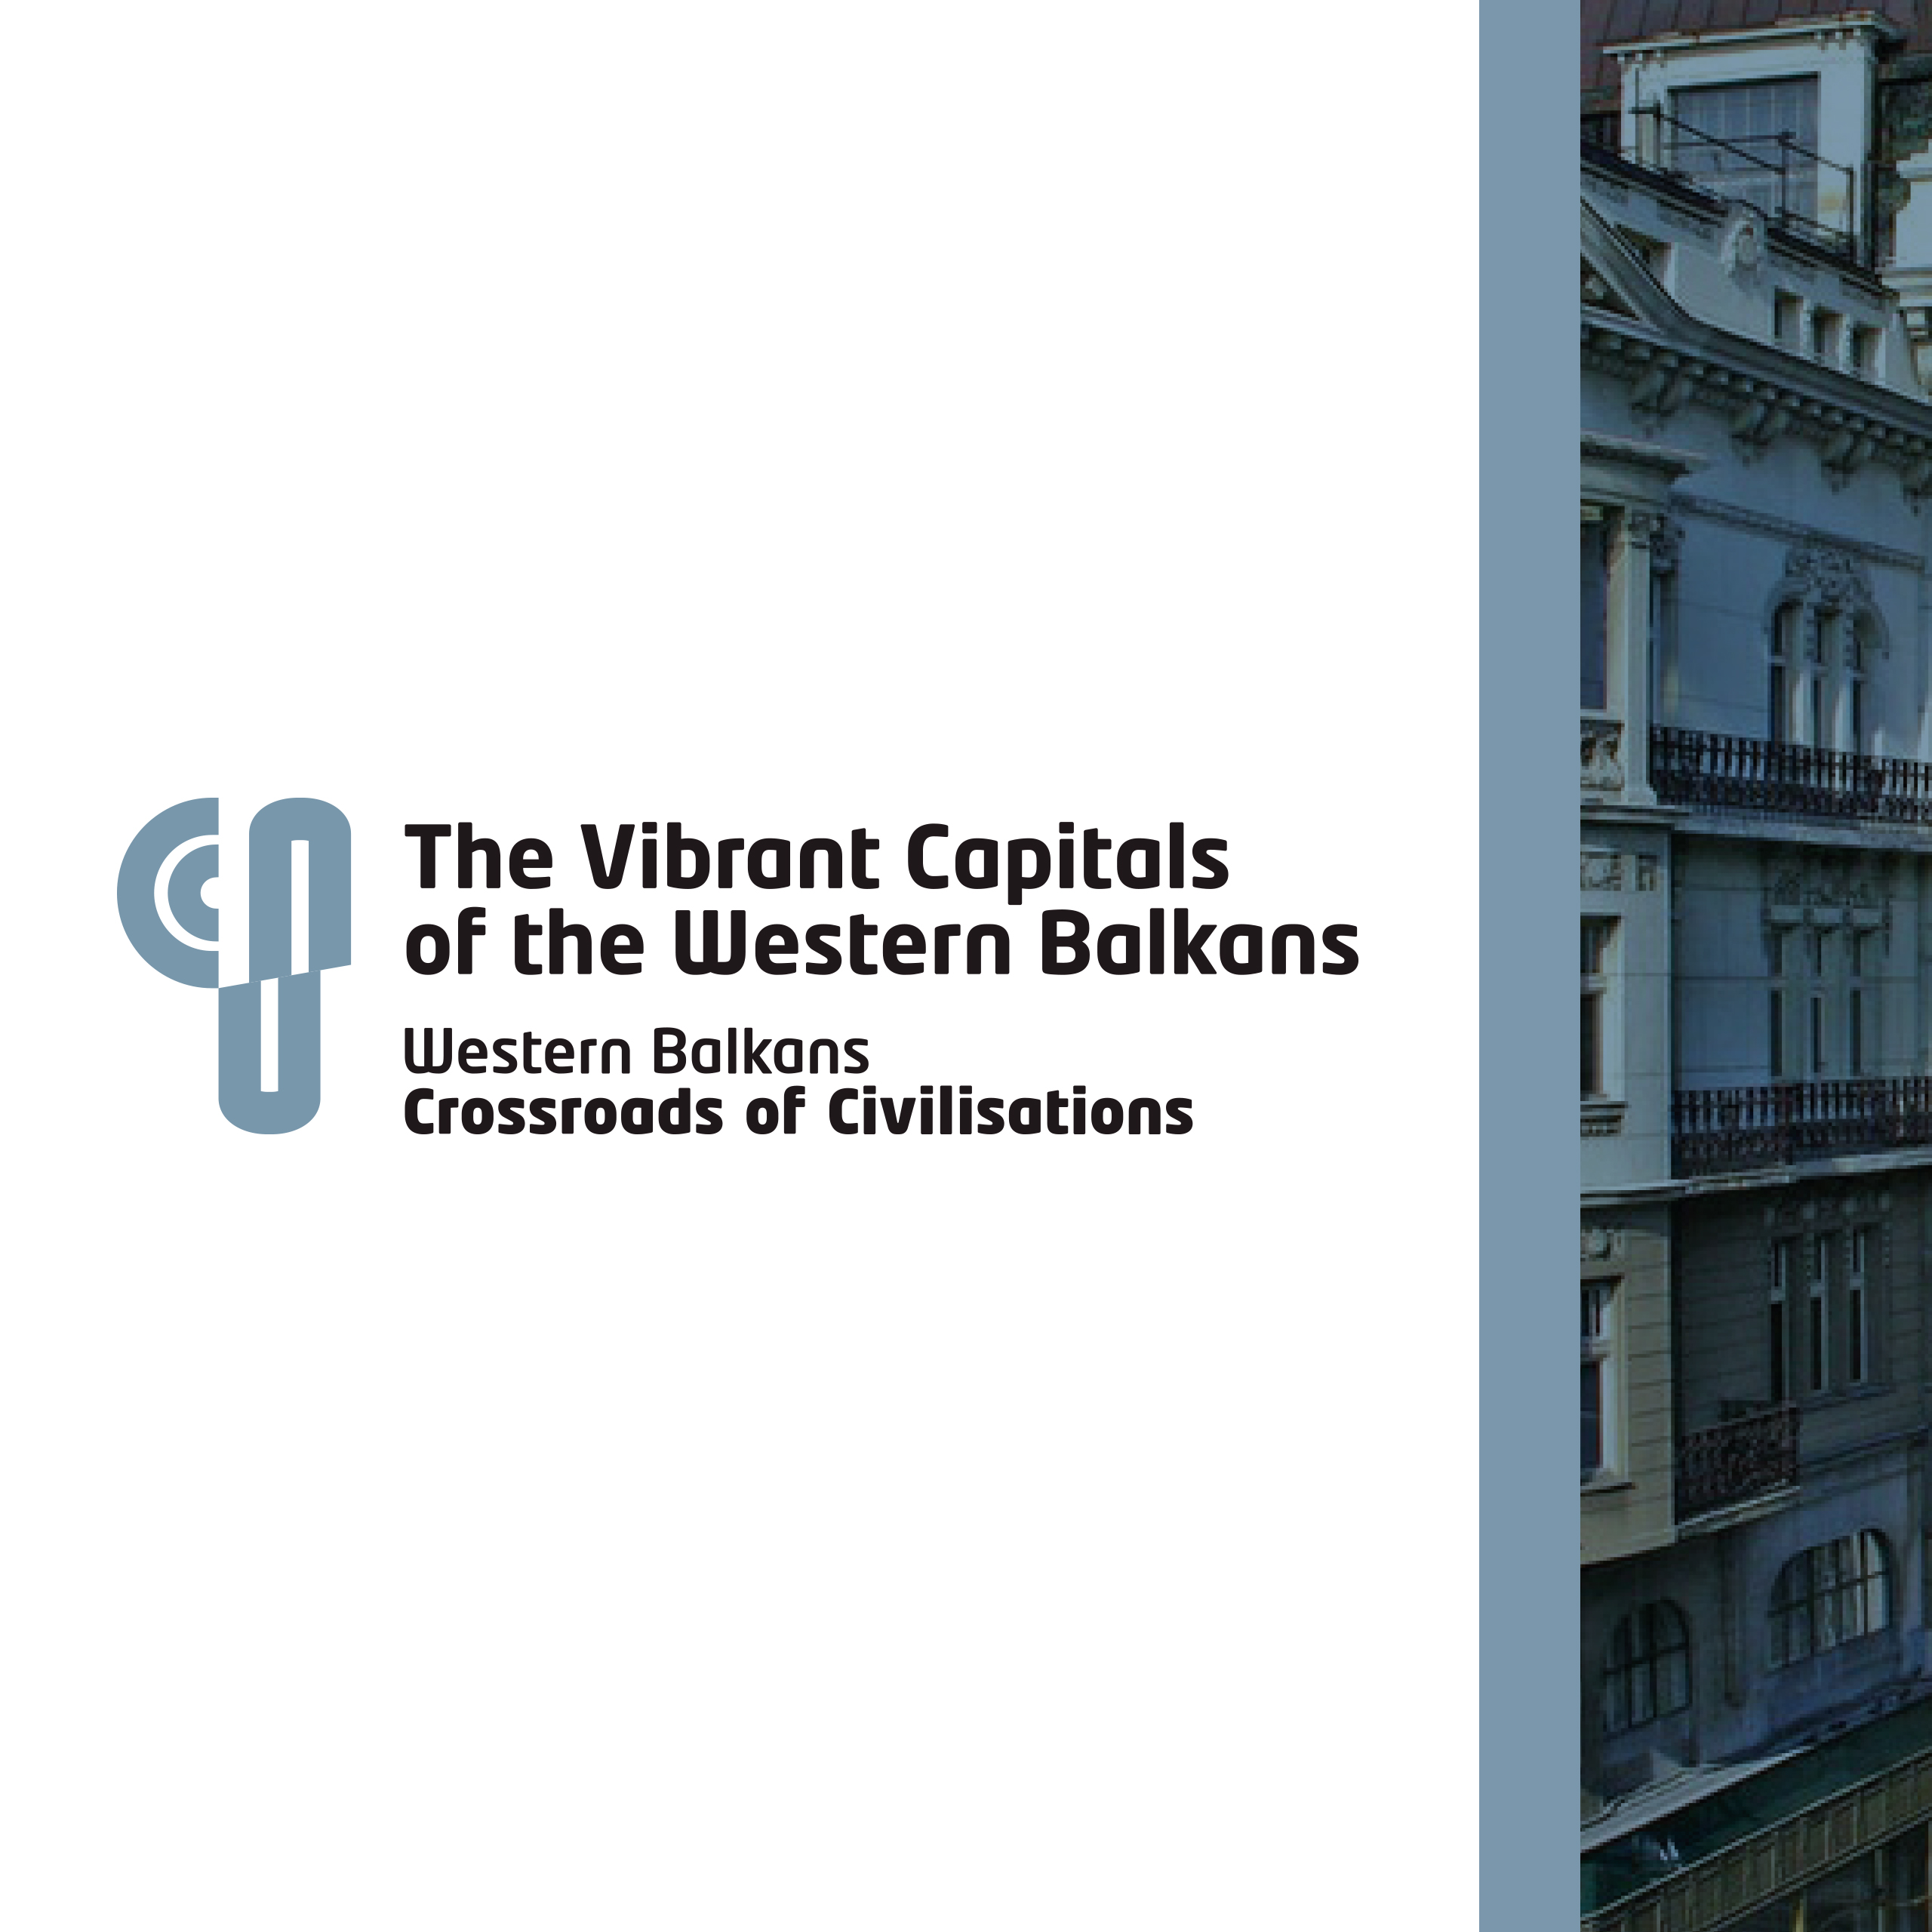 Western Balkans Crossroads of Civilisations, Project Img 2 - Vatra Agency / Founder & CEO Gerton Bejo